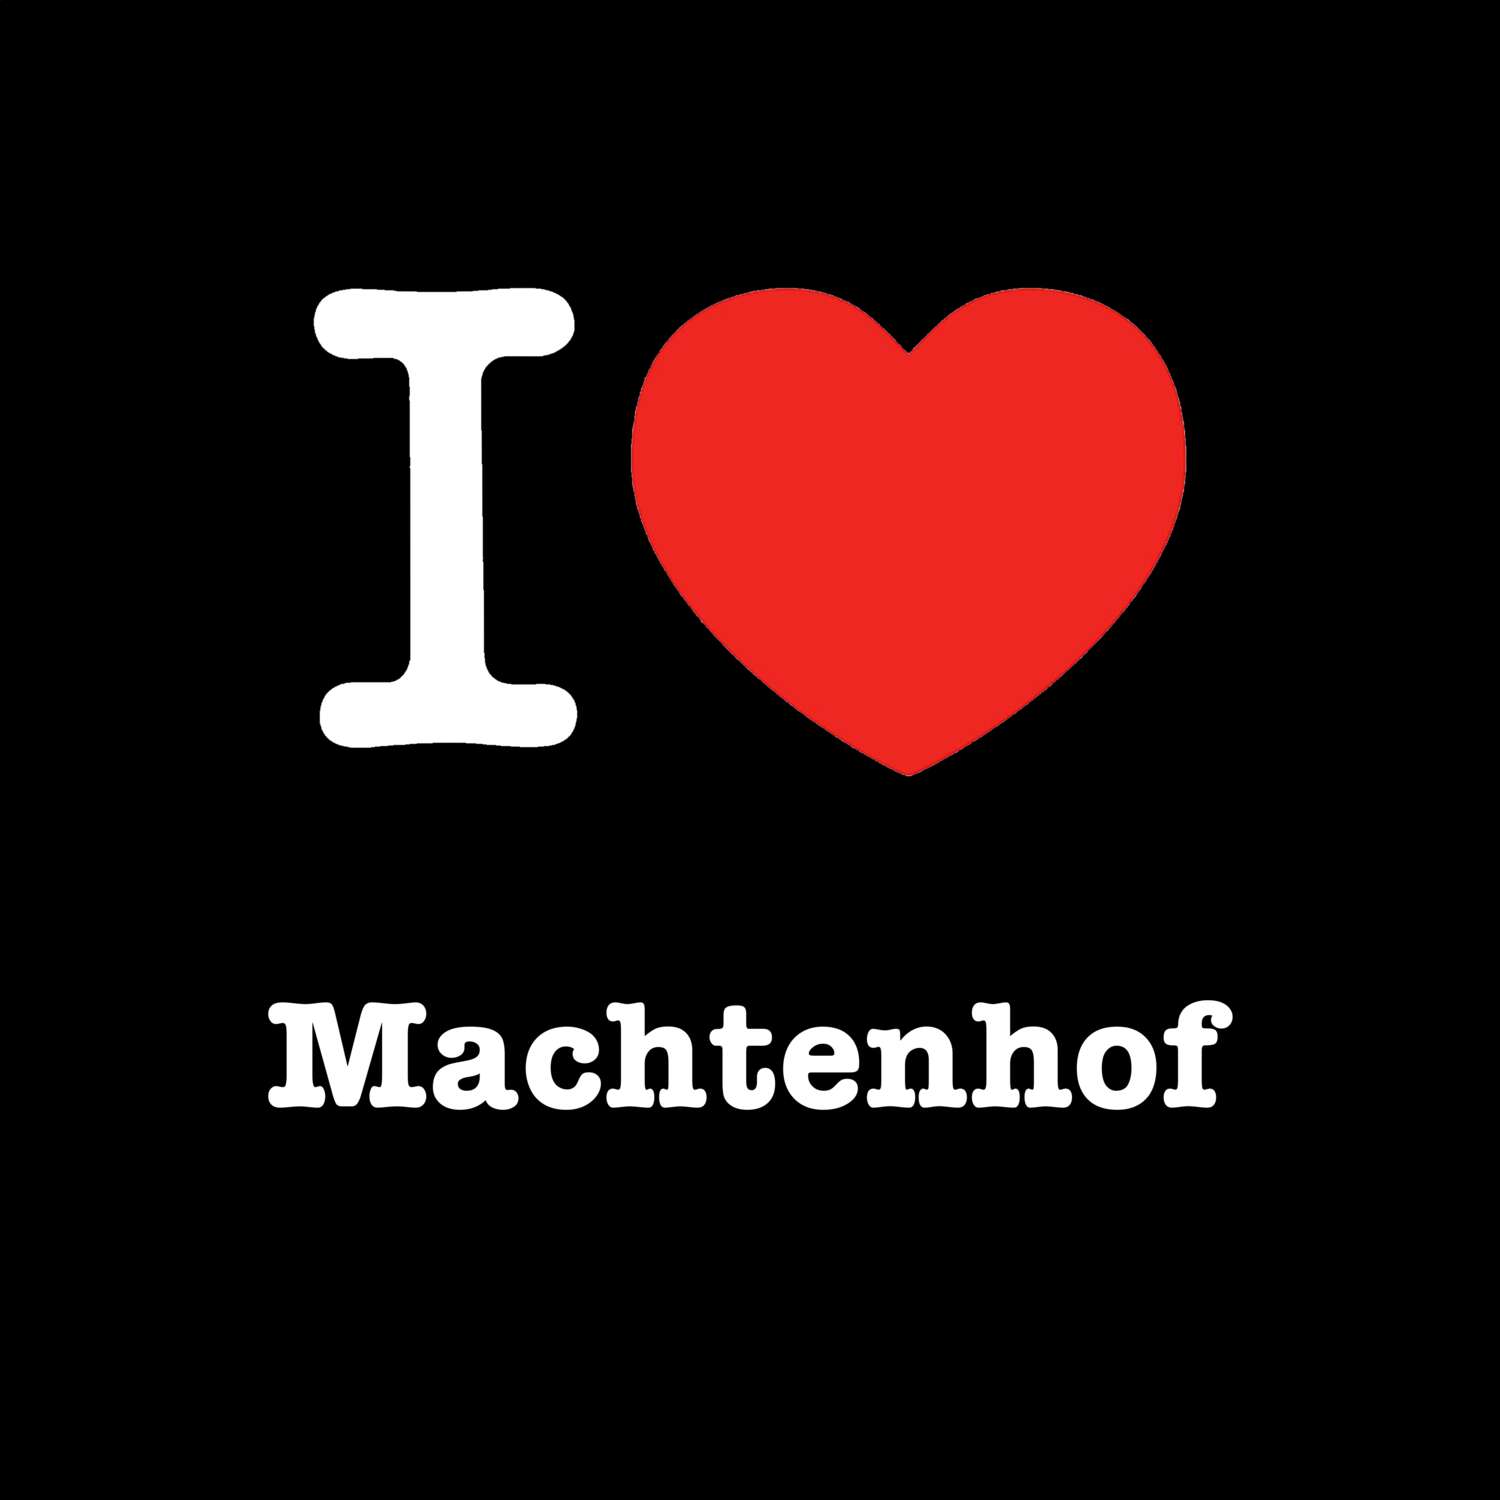 Machtenhof T-Shirt »I love«